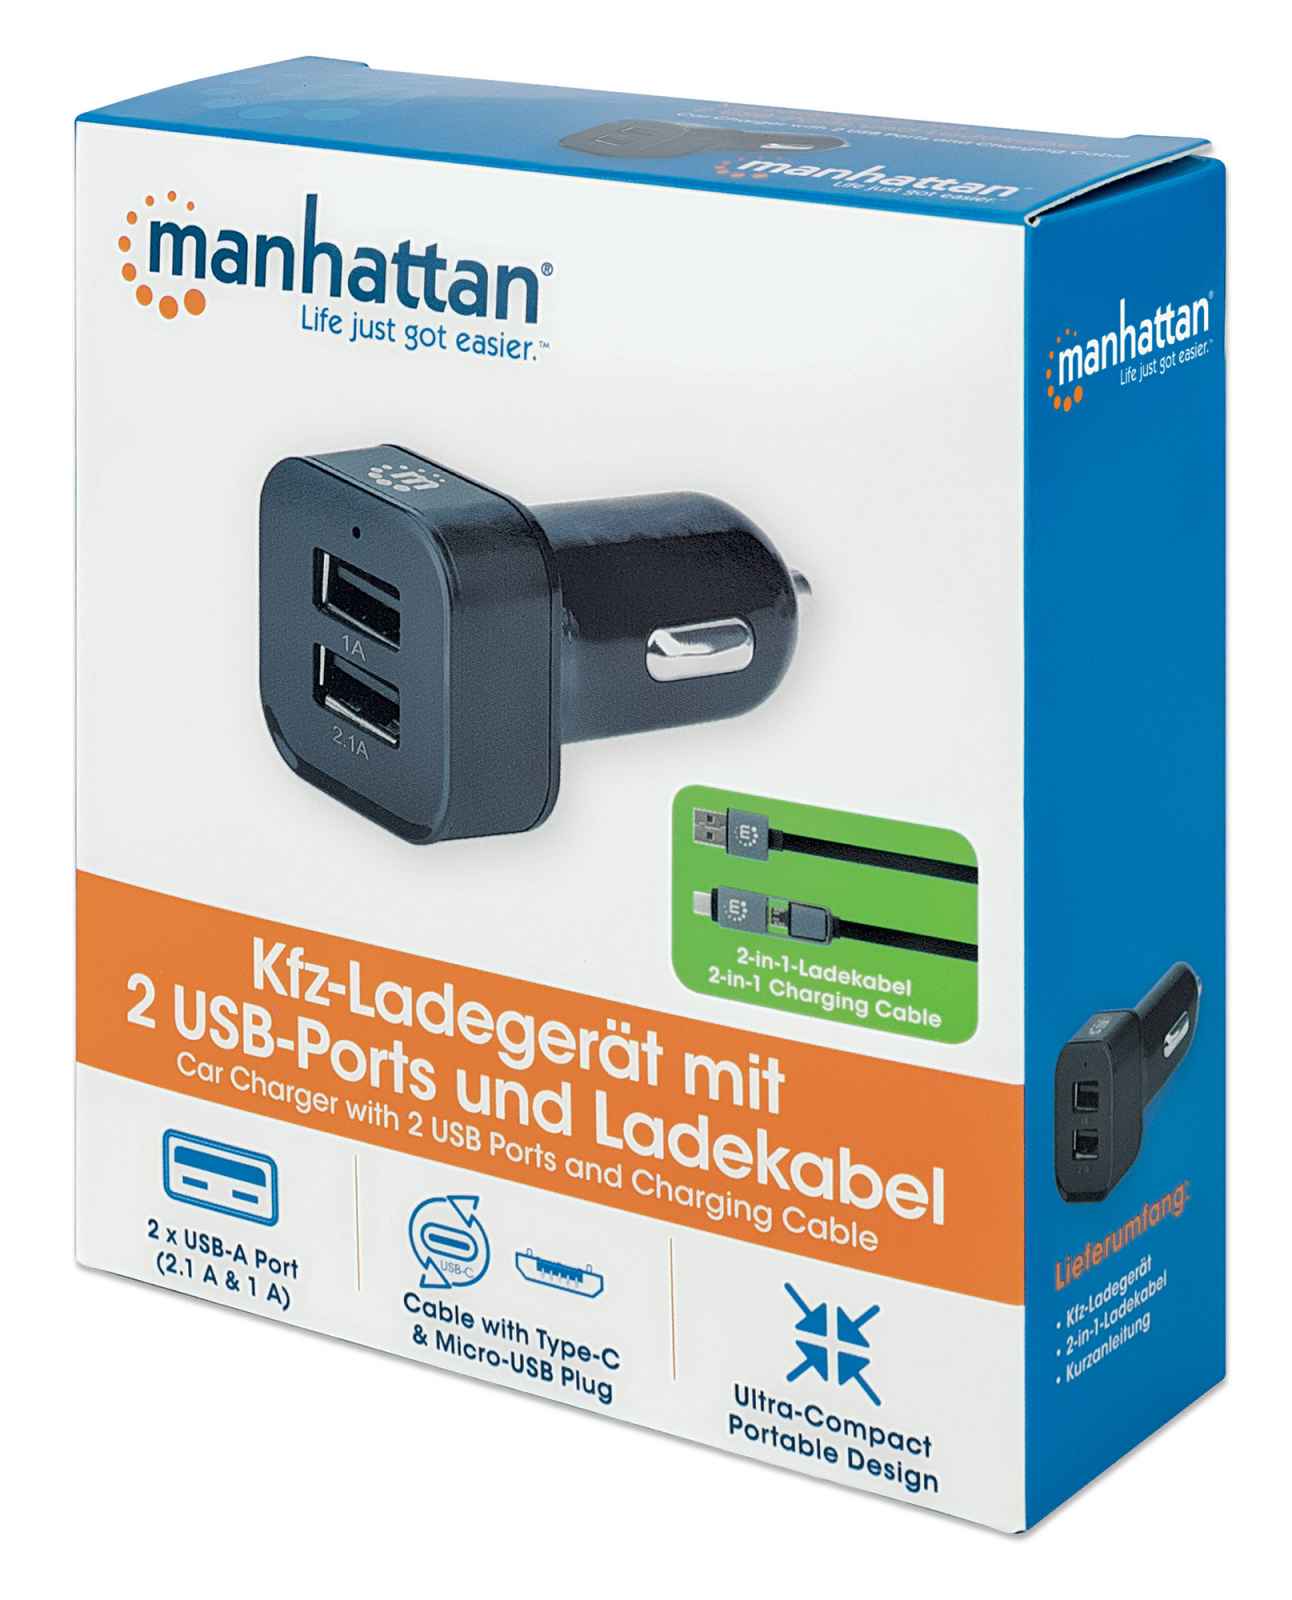 Manhattan Cargador para coche con 2 puertos USB y un cable de carga (102179)